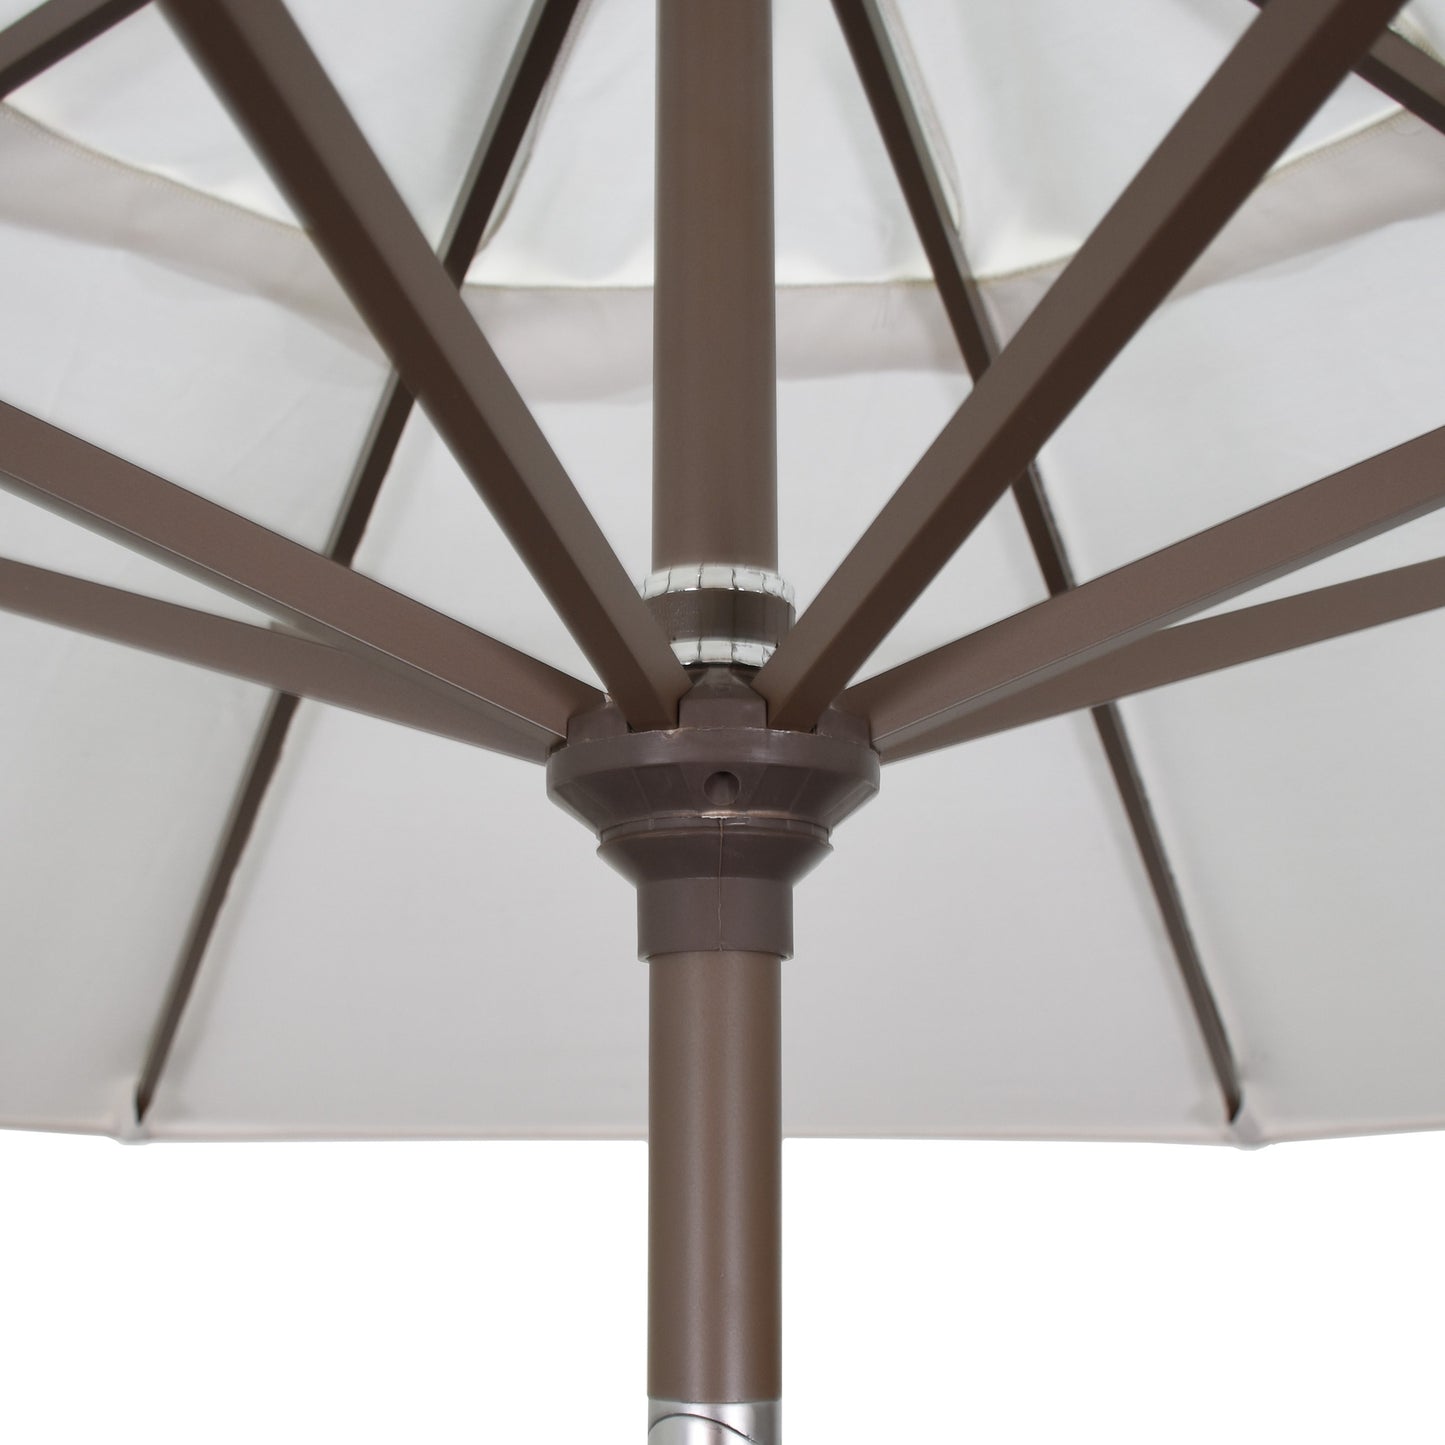 9' Market Style Outdoor Umbrella with Wind Vent Cabana Regatta